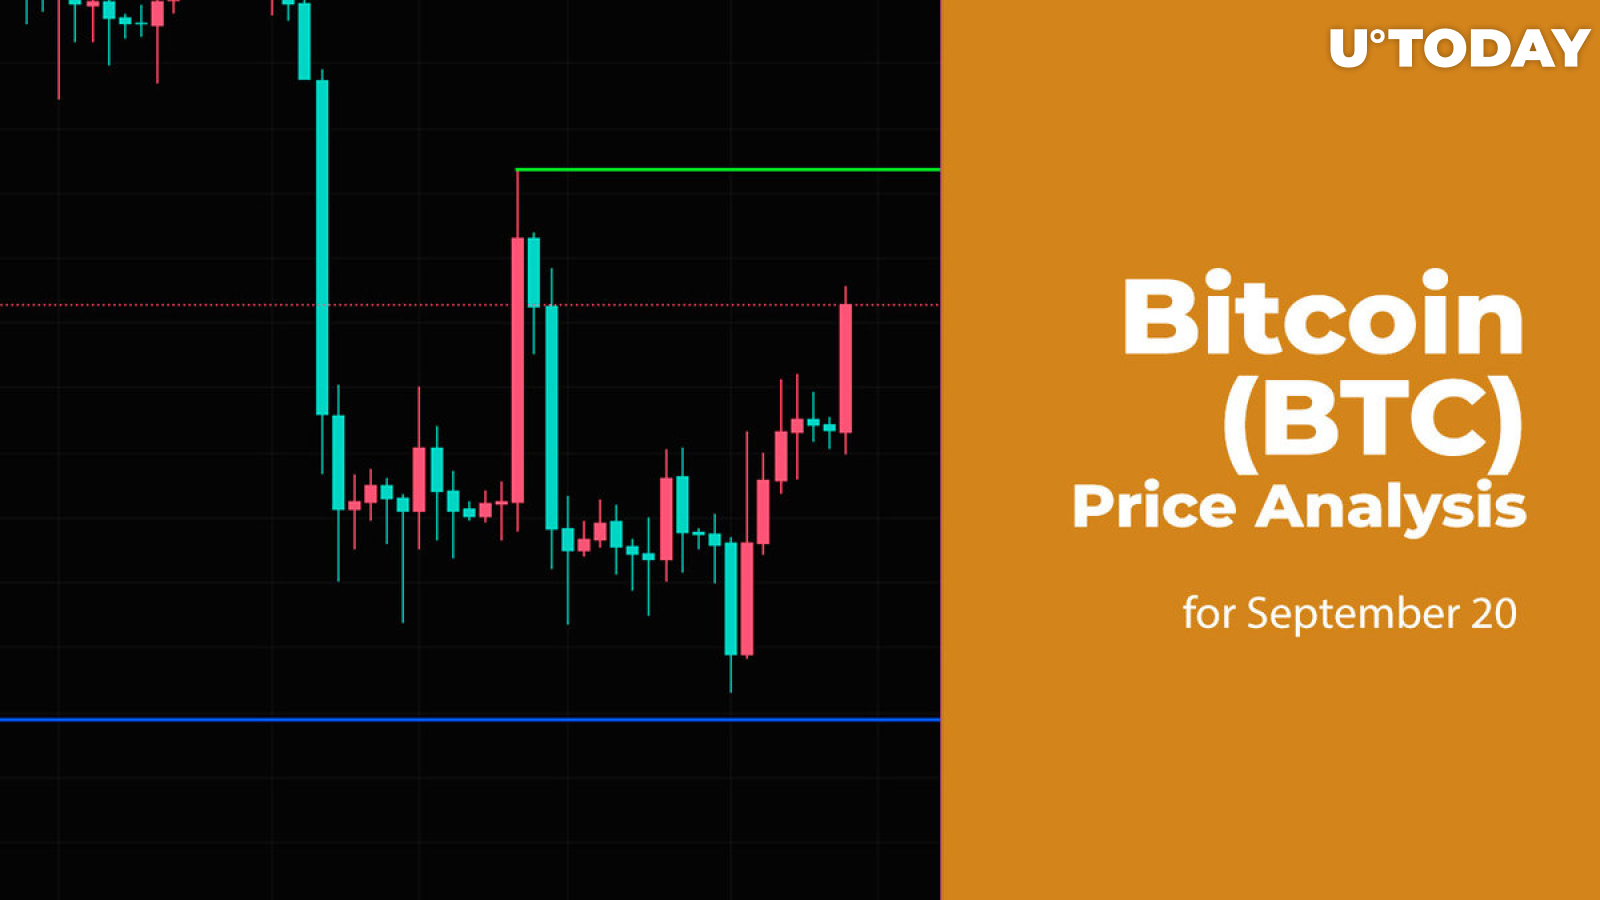 Bitcoin (BTC) Price Analysis for September 20